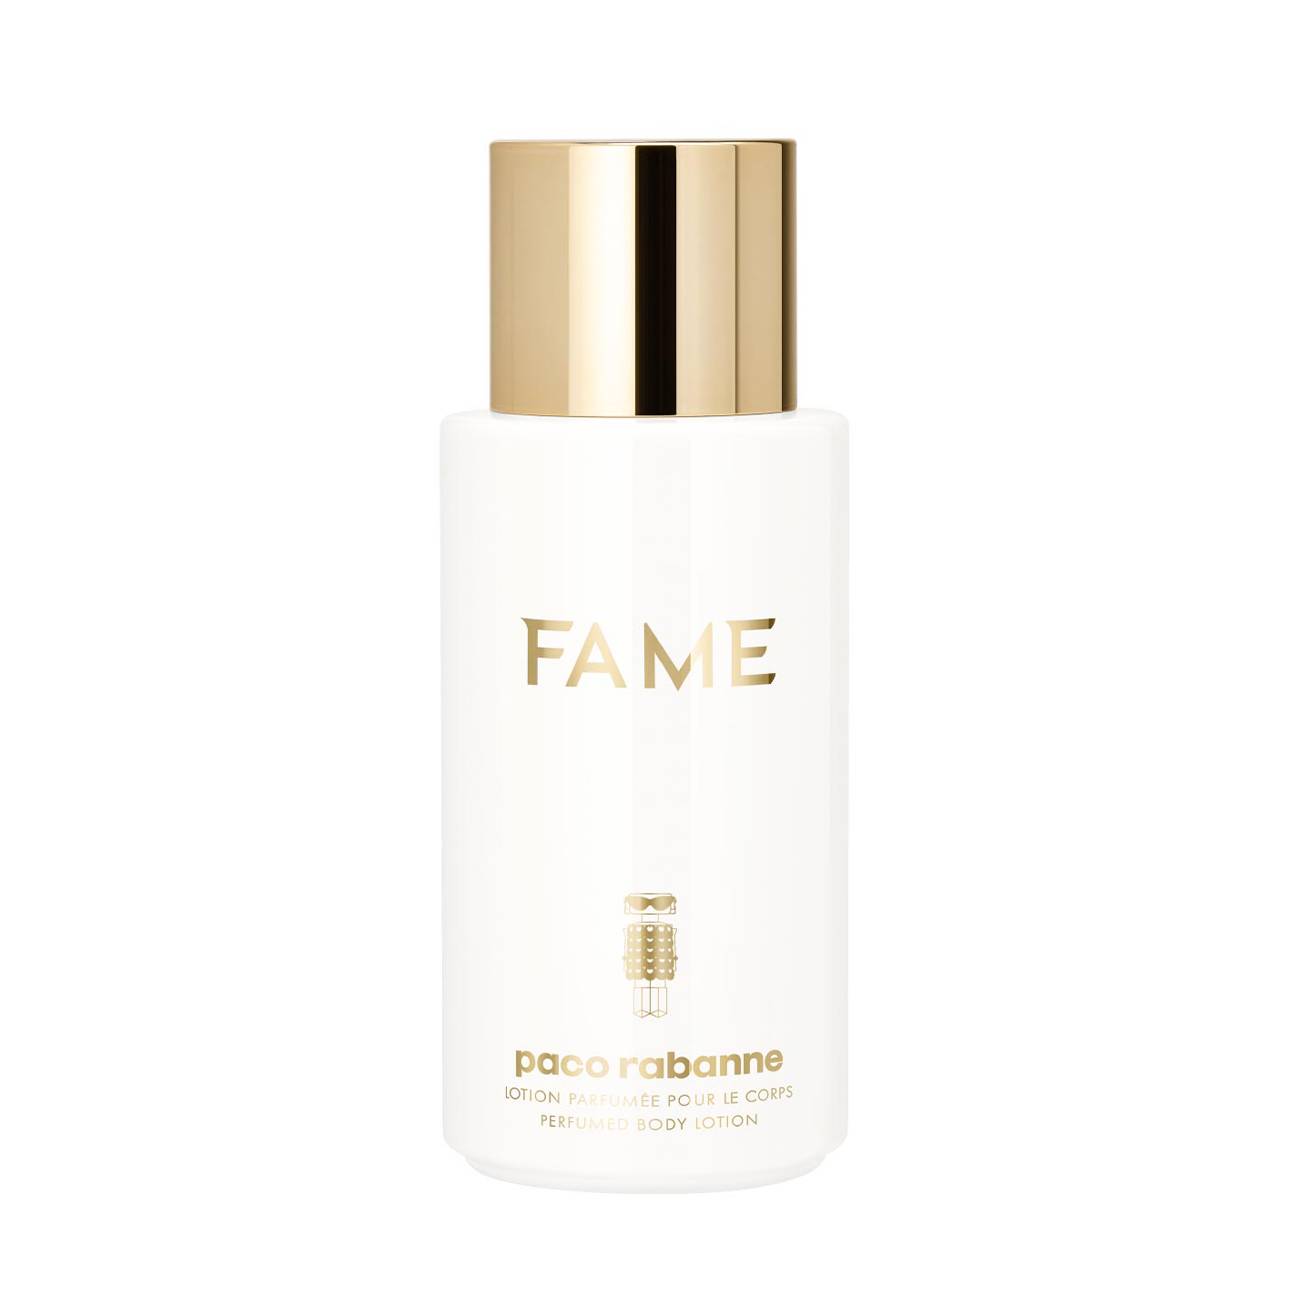 Fame Perfumed Body Lotion 200 ml bestvalue.eu